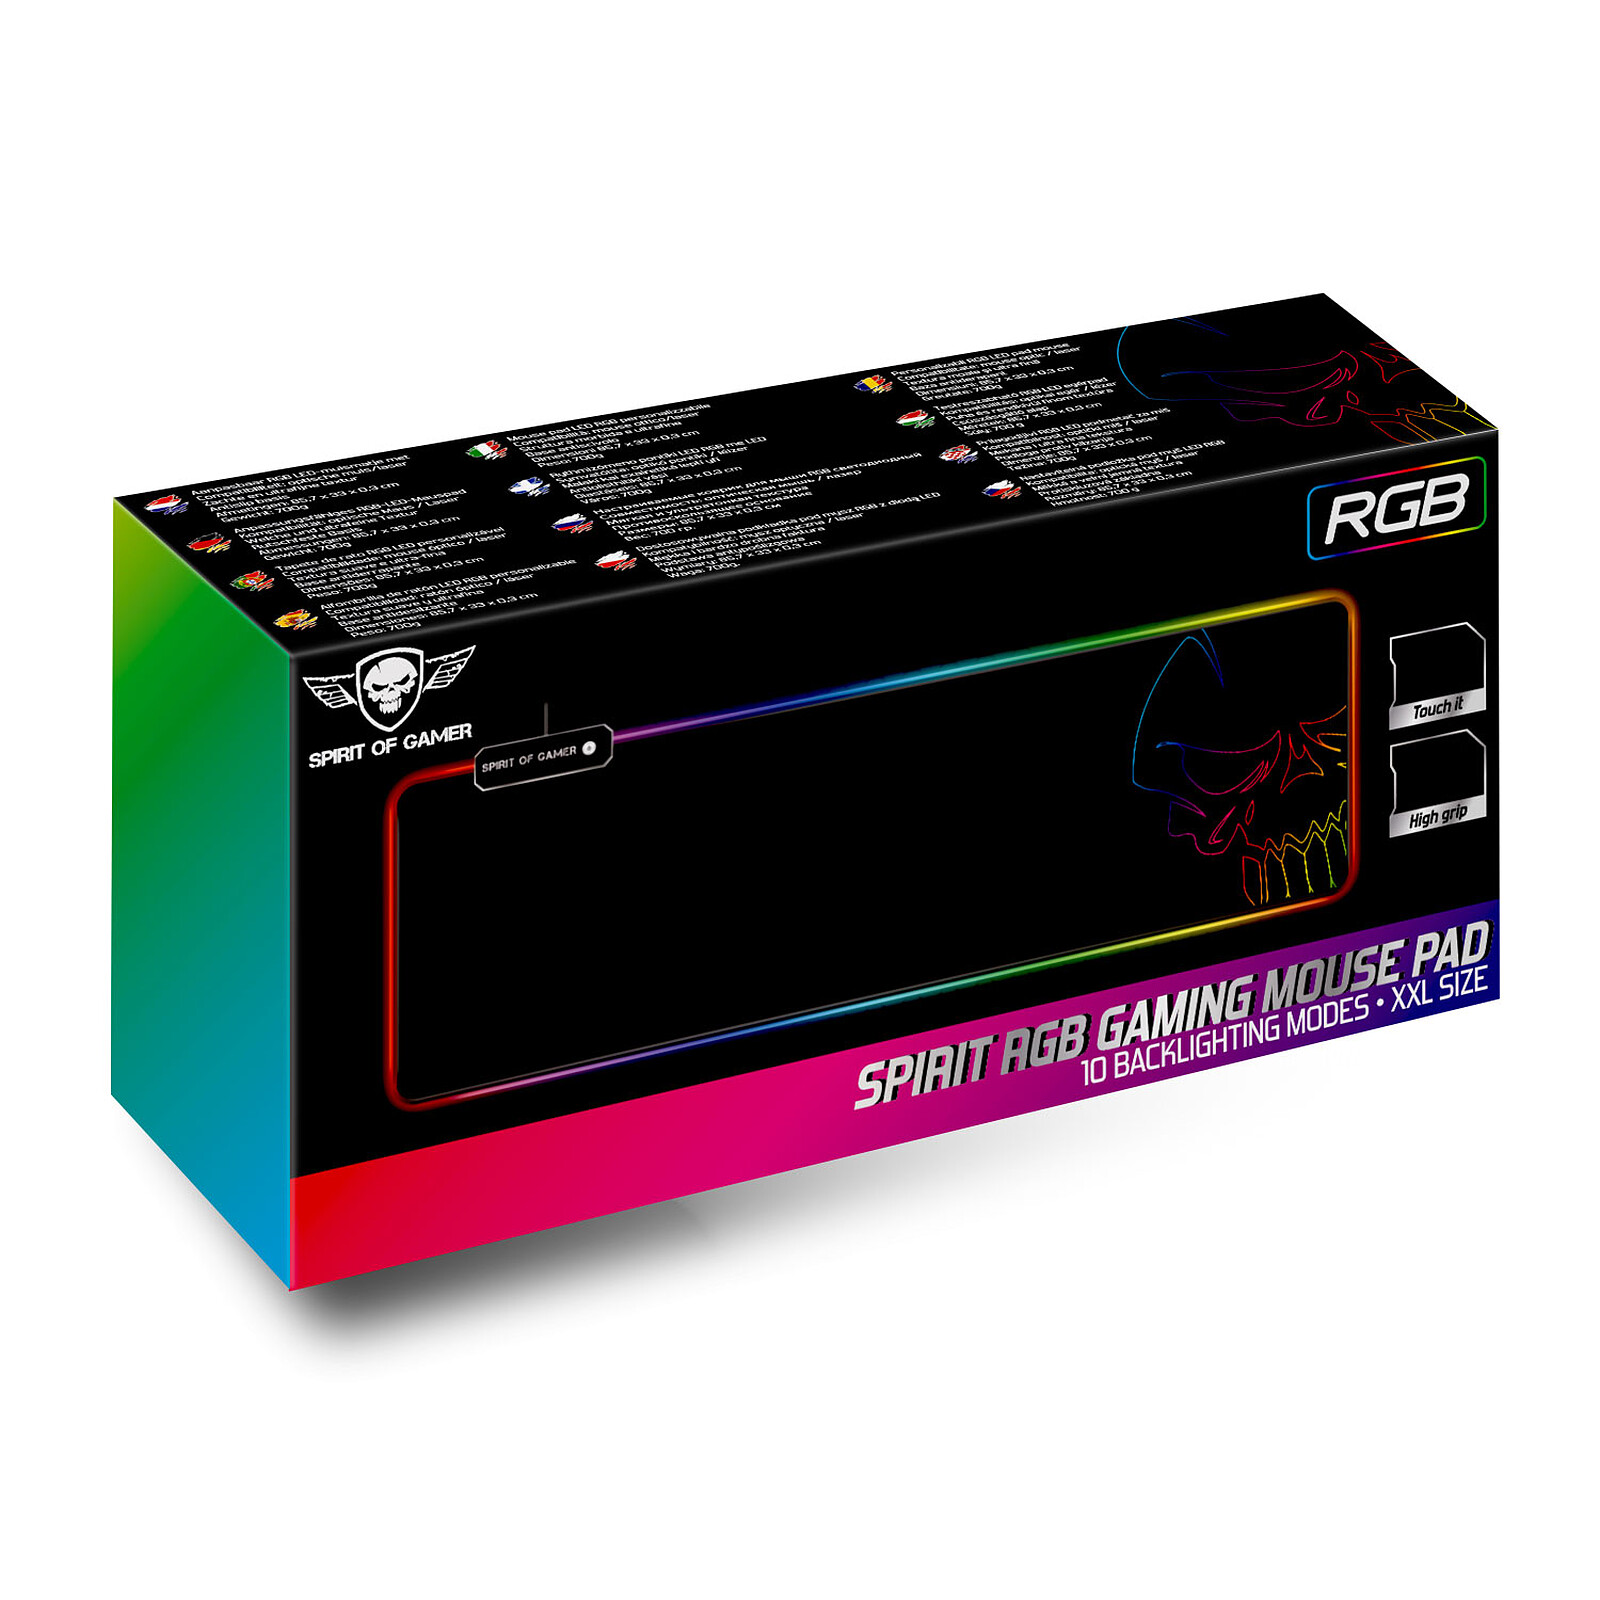 Tapis de souris gaming personnalisable RGB